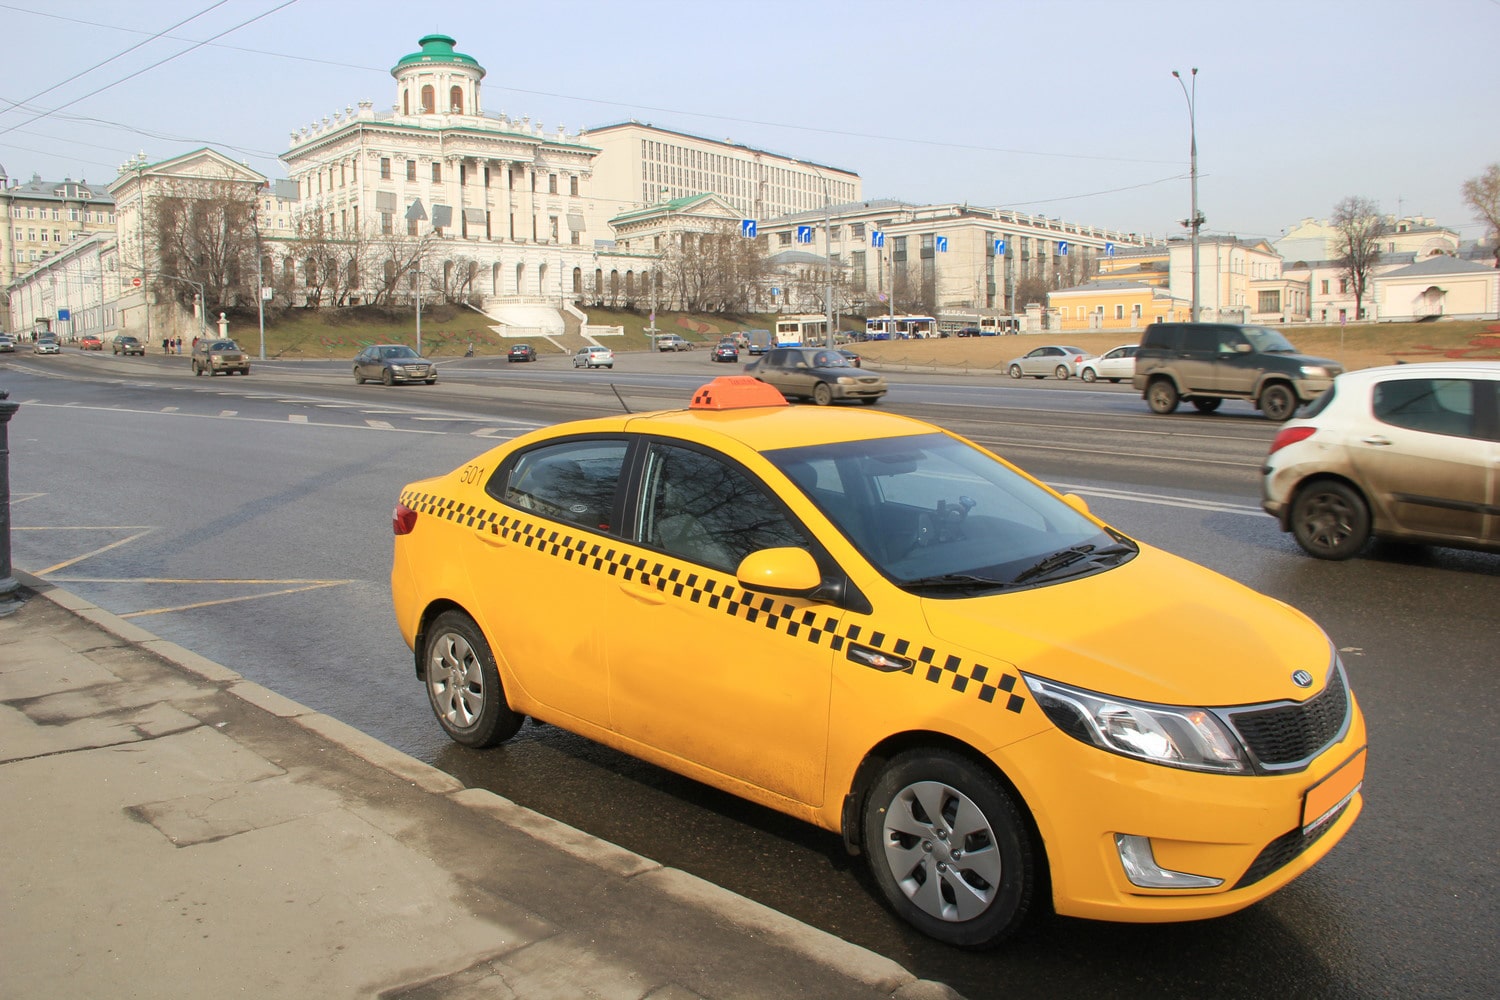 Такси на шри. Машина "такси". Автомобиль «такси». Московское такси. Такса в машине.